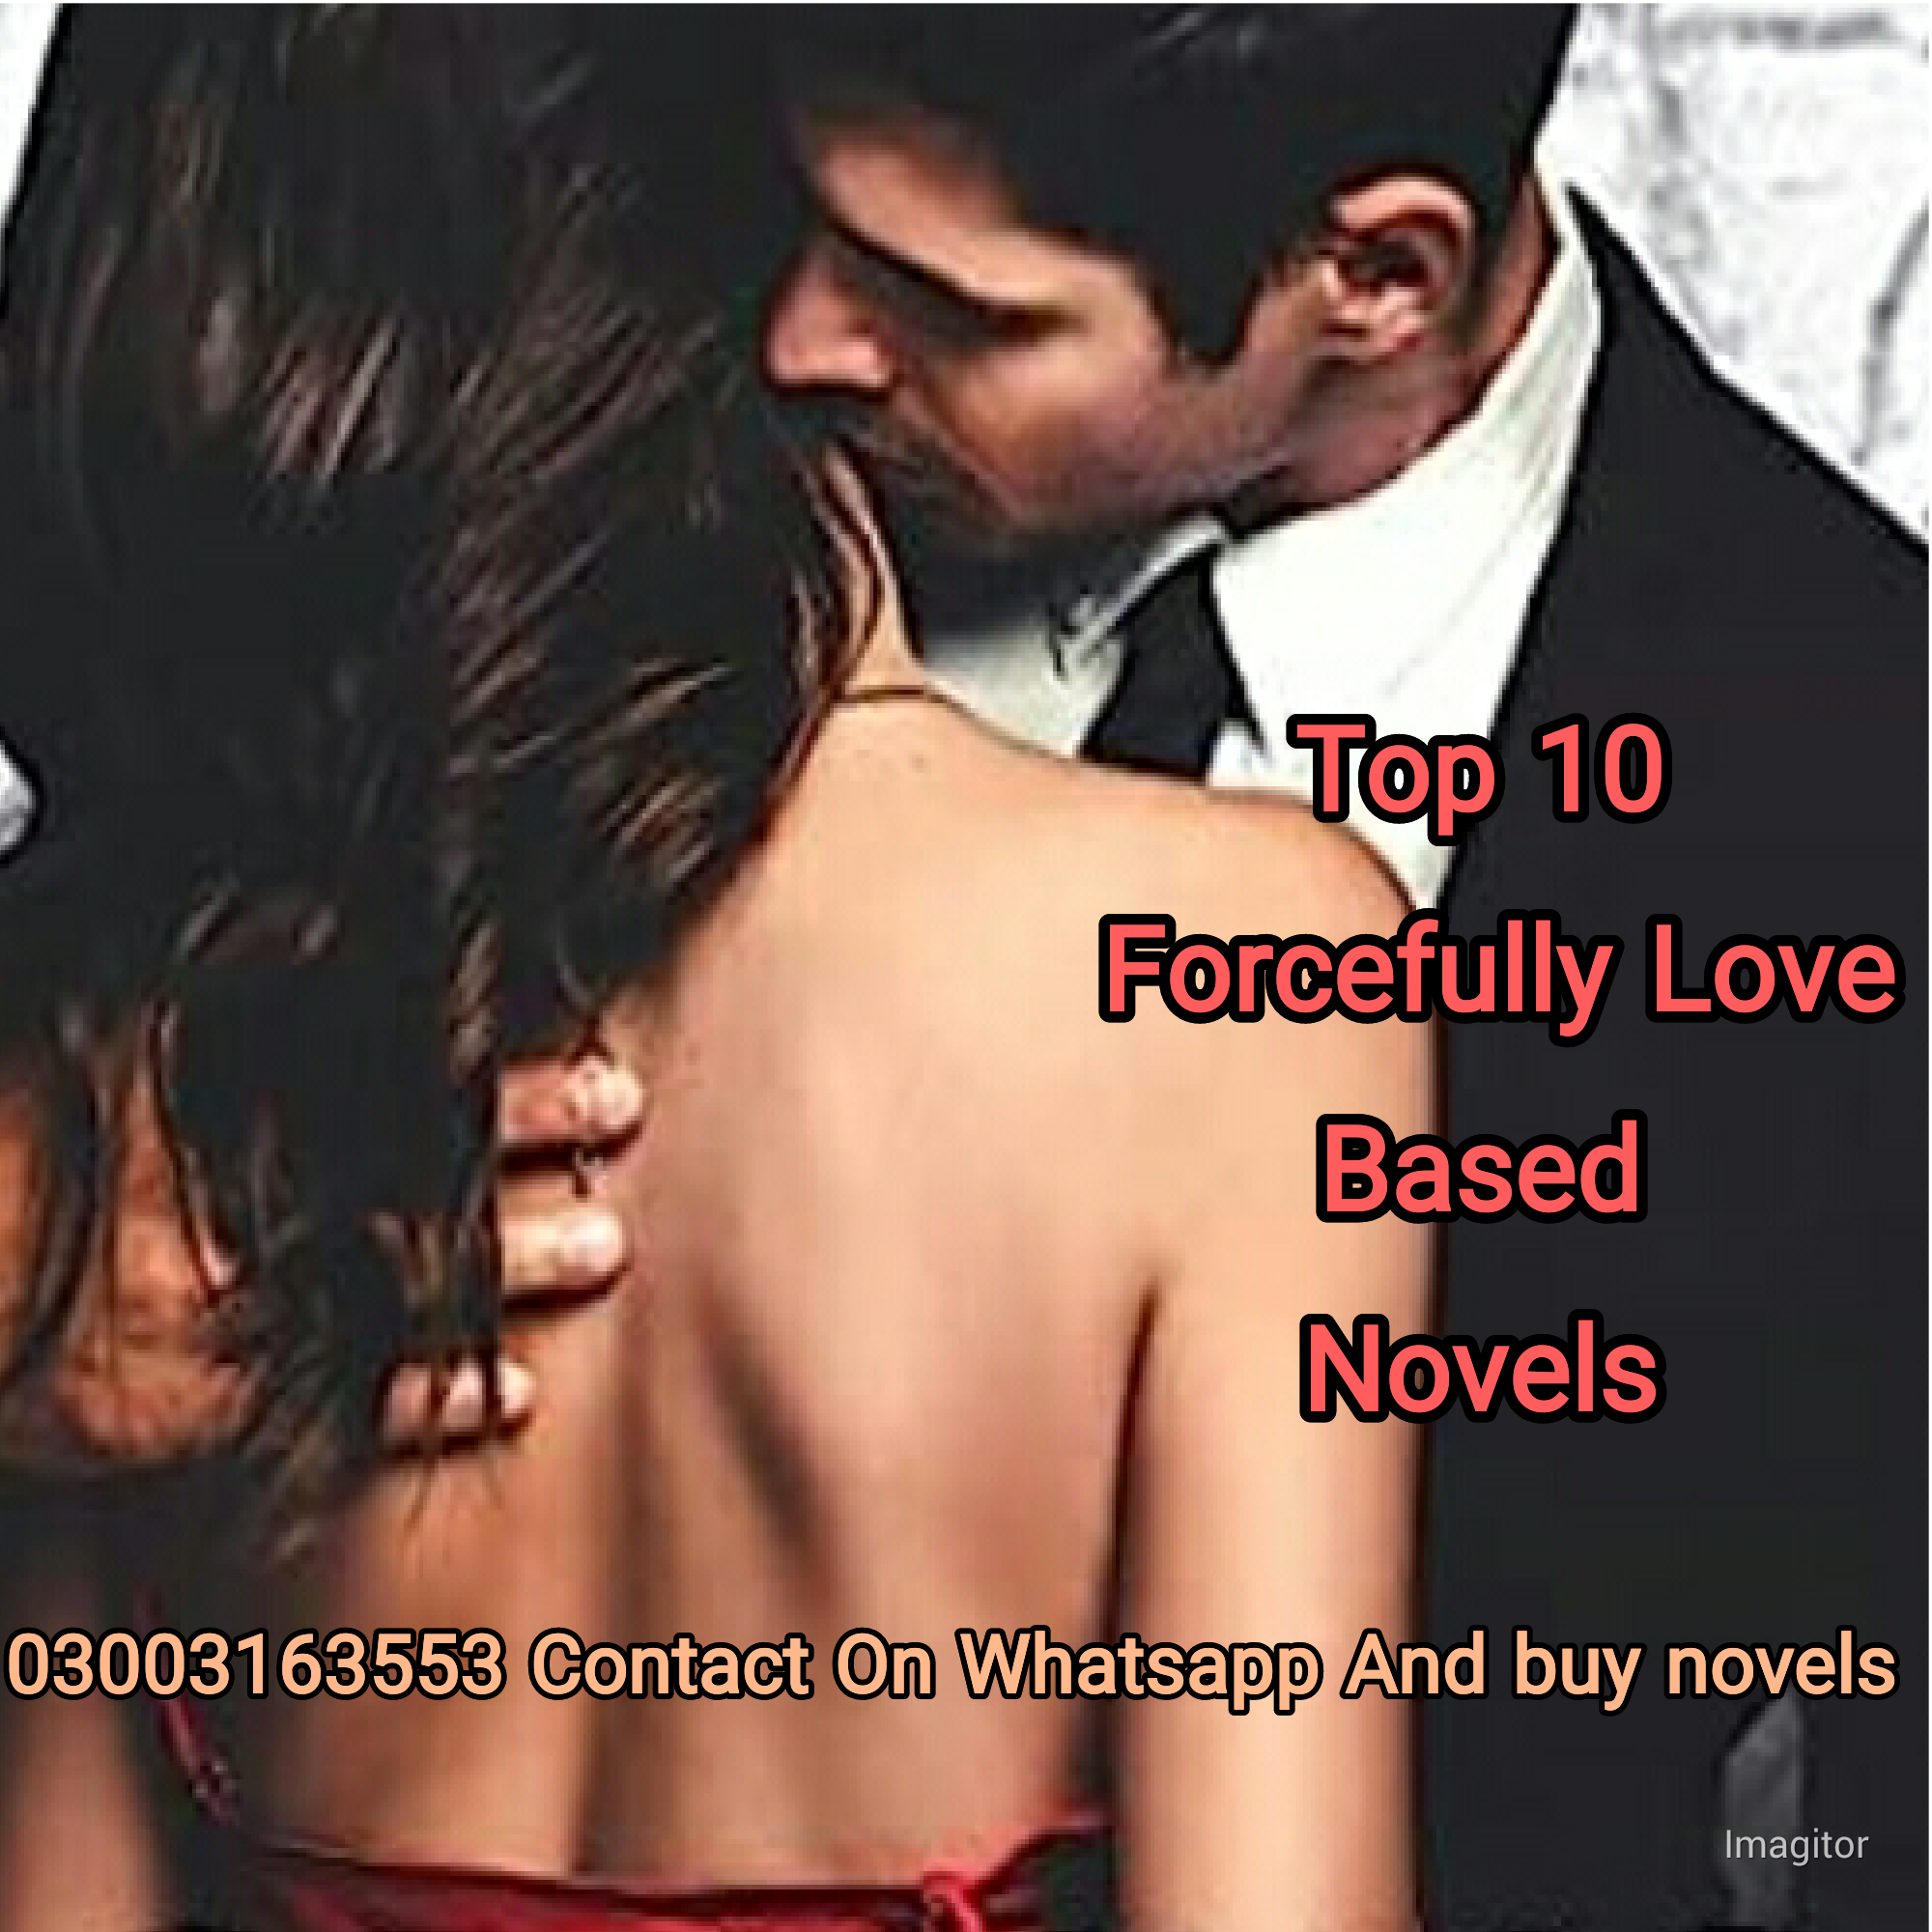 Top 10 Forcefully Love Based Novels